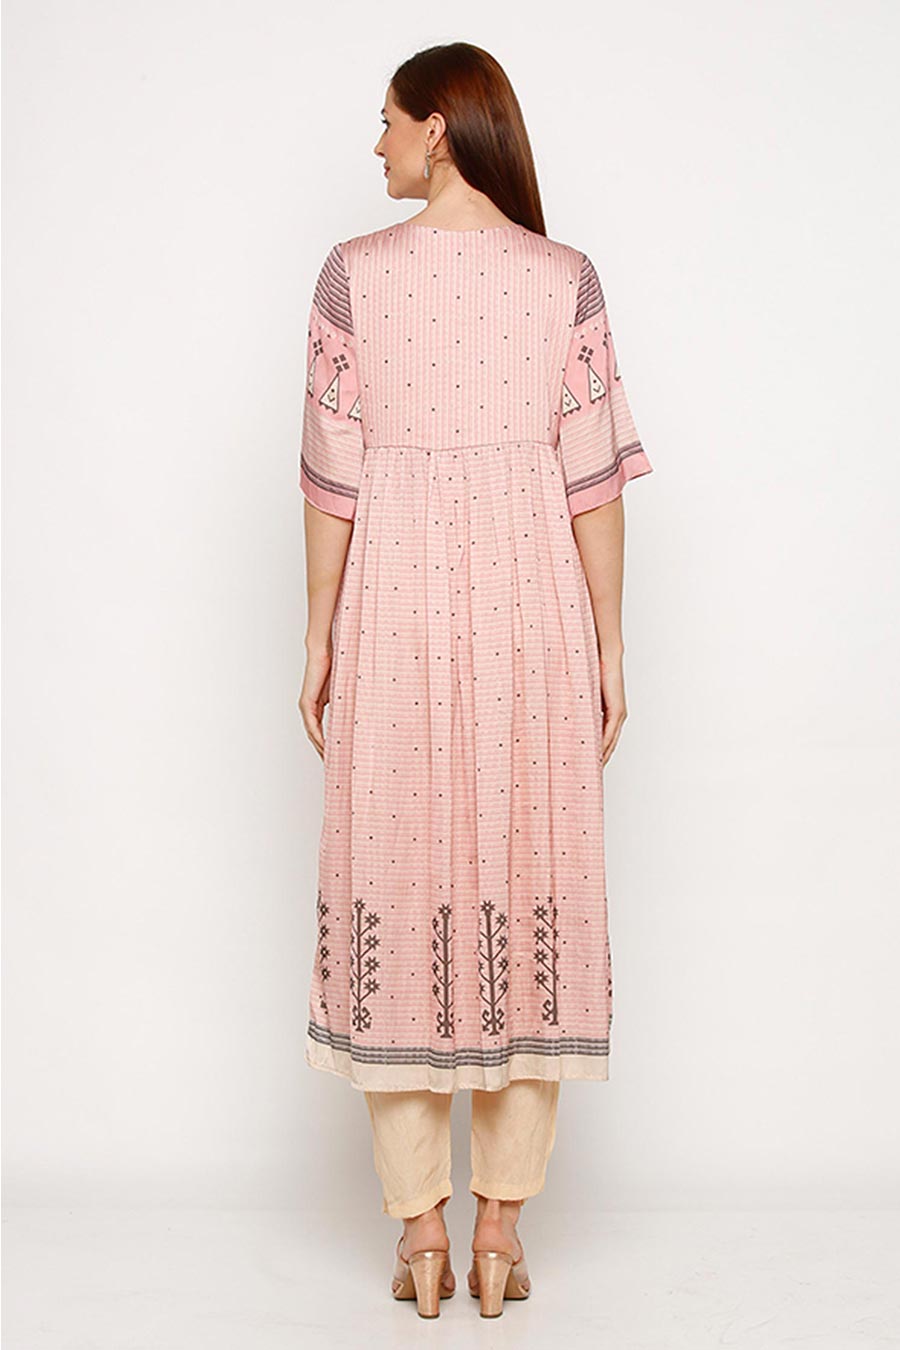 Pixel Printed Satin Dress